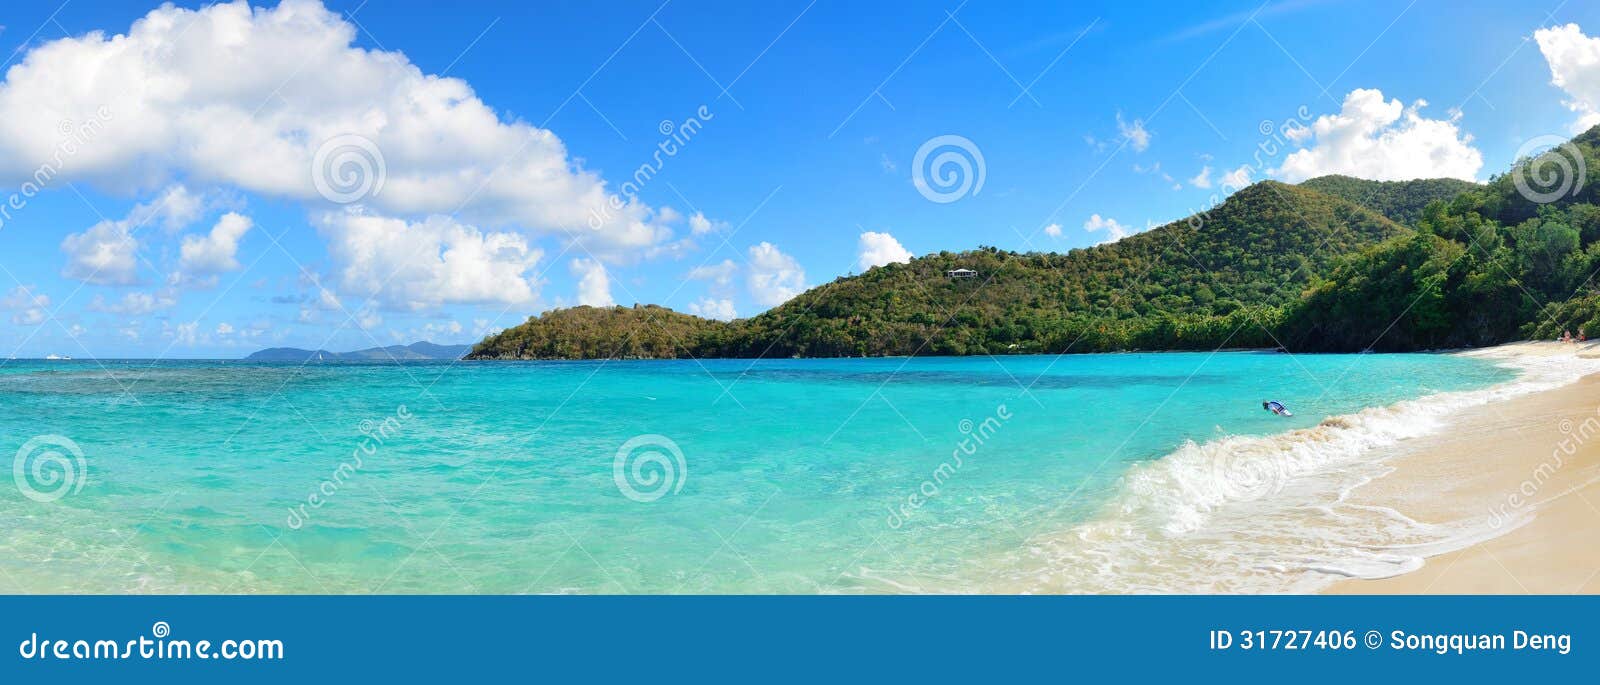 Virgin Islands Beach stock photo. Image of holiday, sand - 31727406